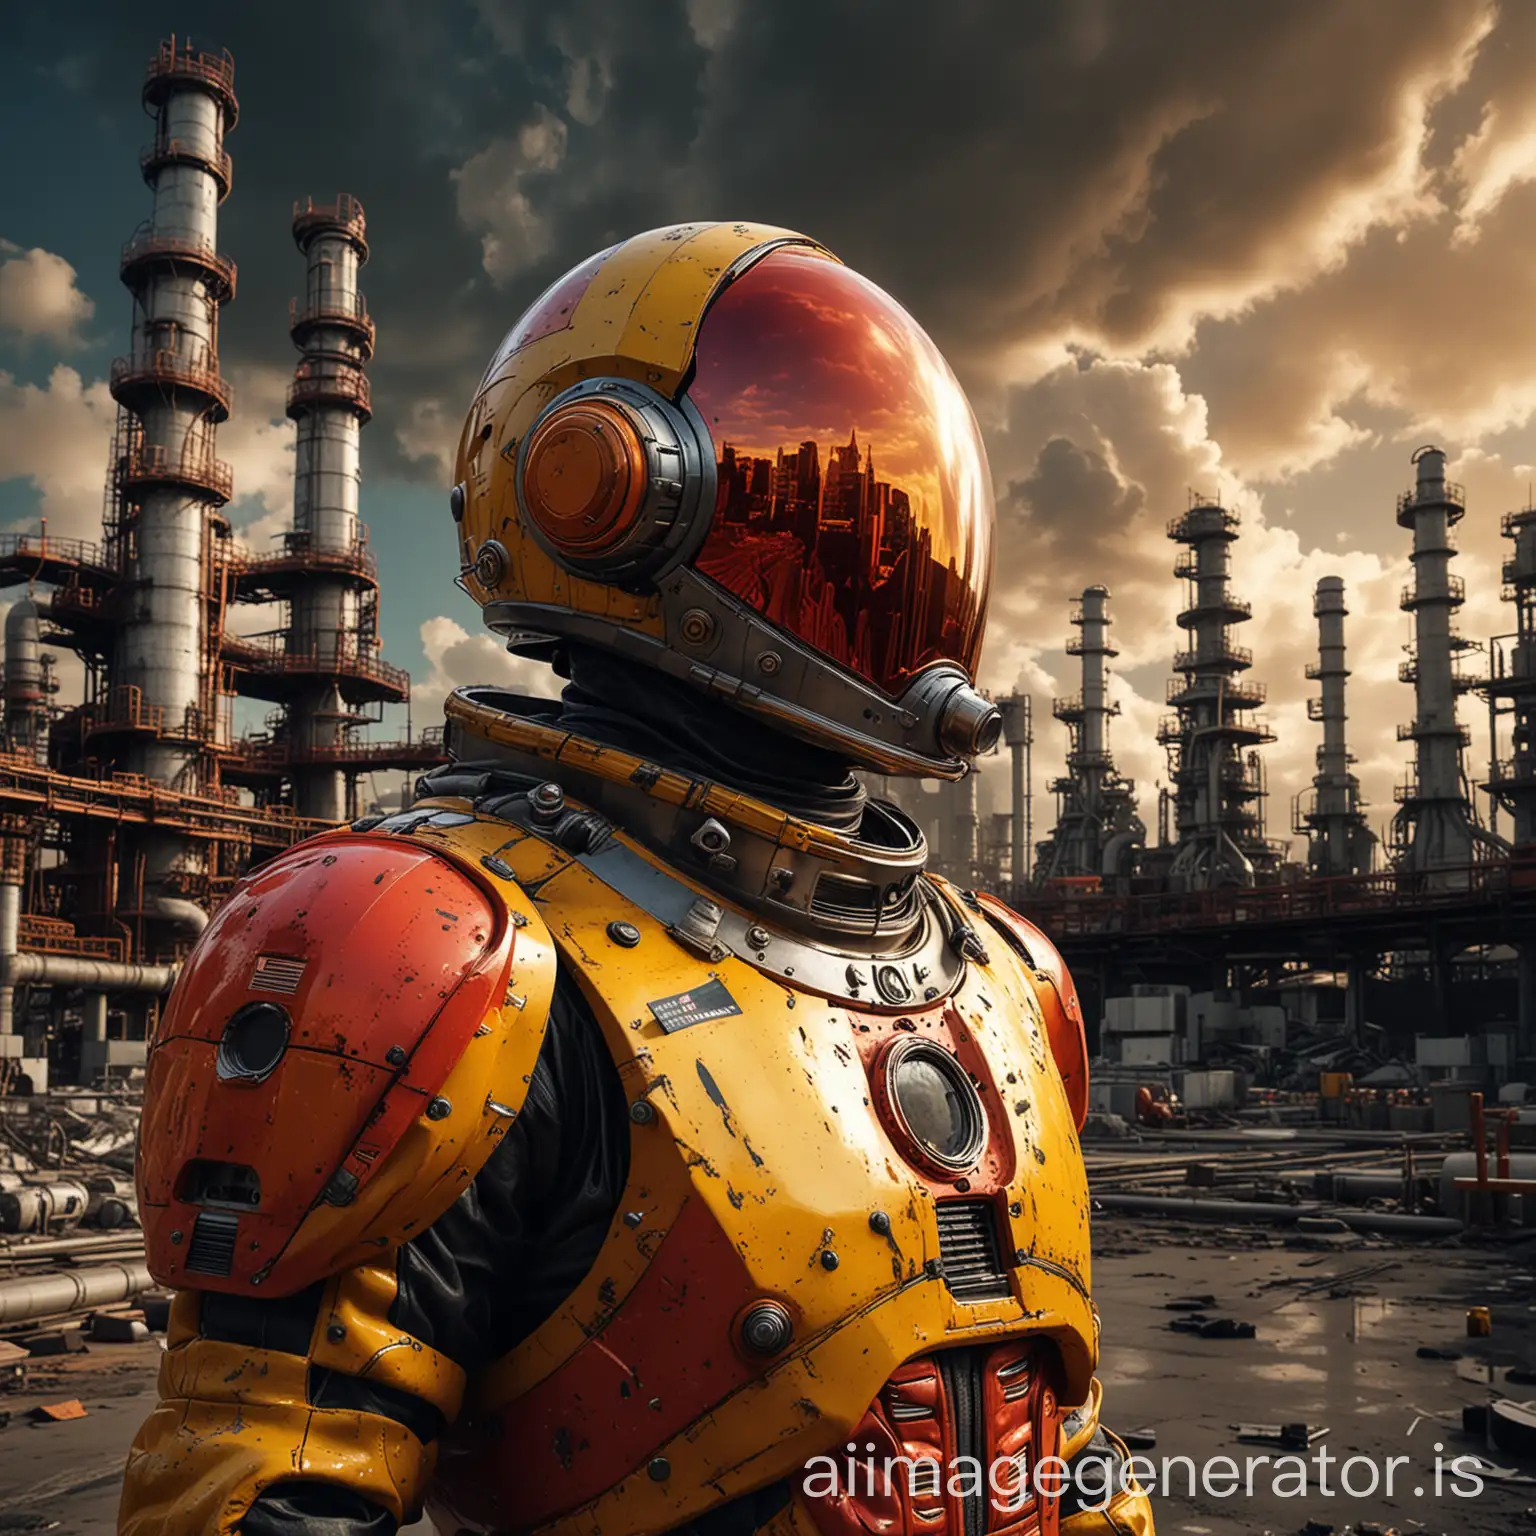 Futuristic-Space-Suit-Helmet-in-Industrial-Cityscape